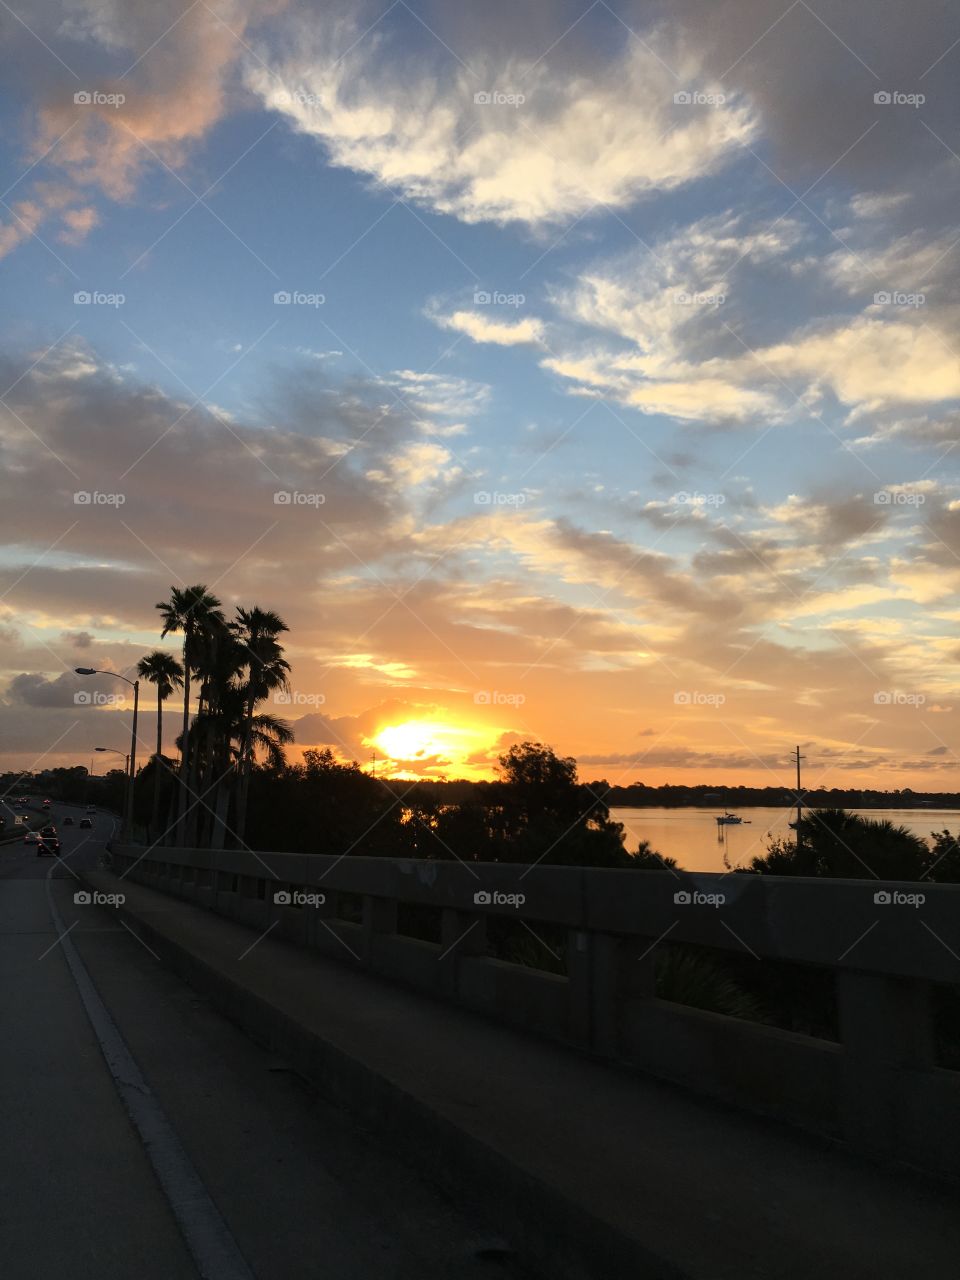 An amazing sunrise at Merritt Island, Florida